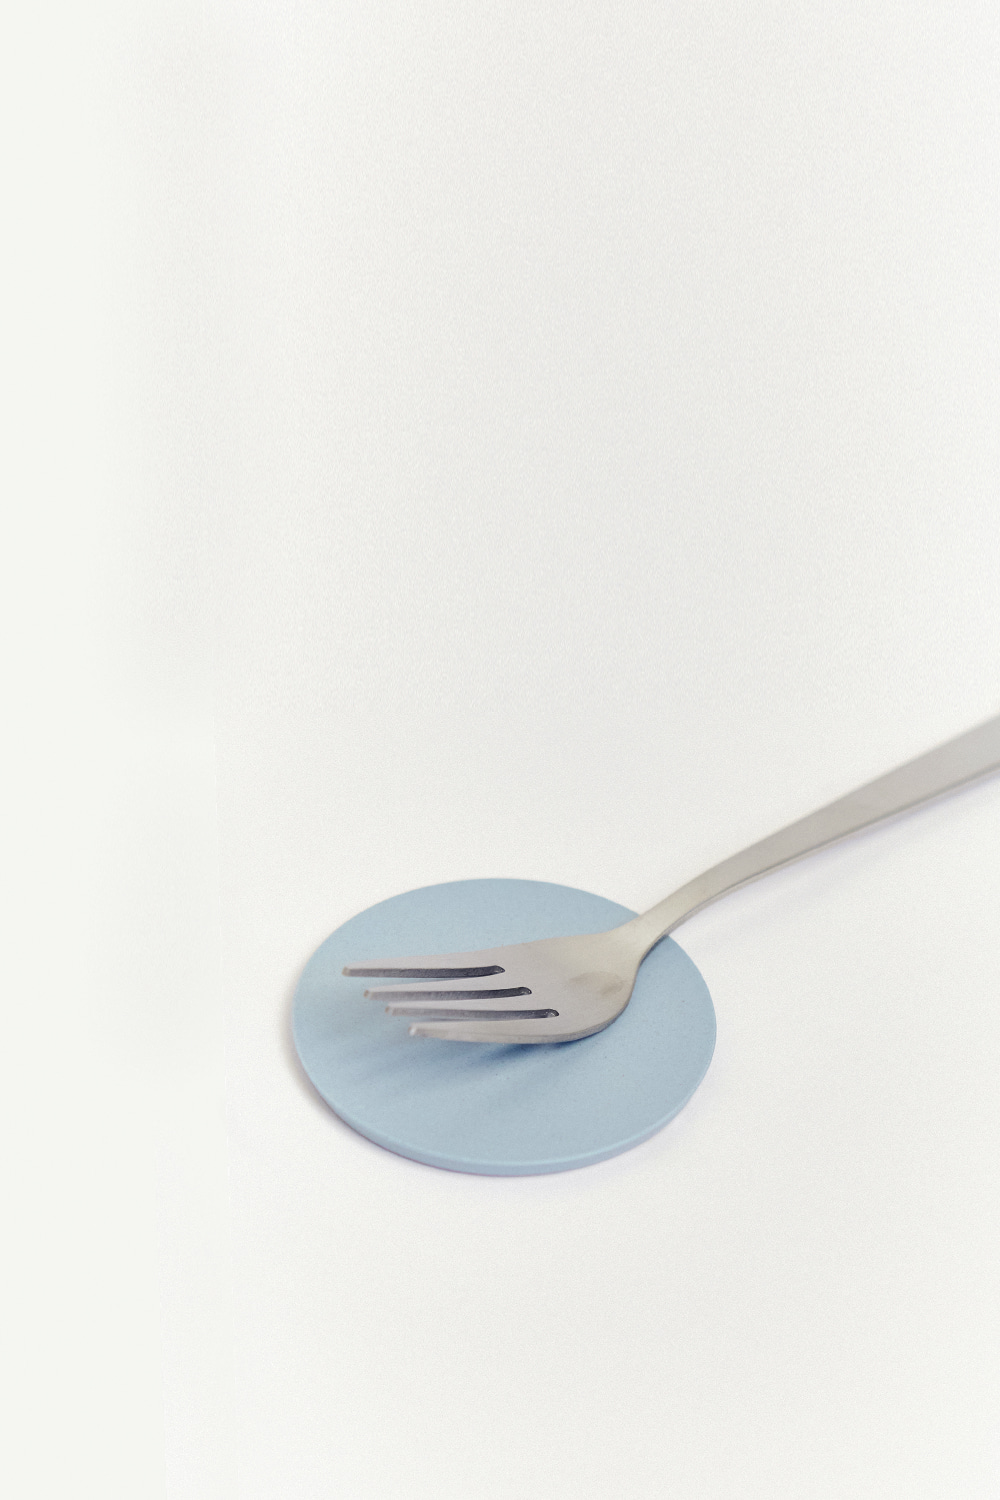 shihoil Cutlery Coaster / azur blue 시호일, 자체제작세라믹브랜드